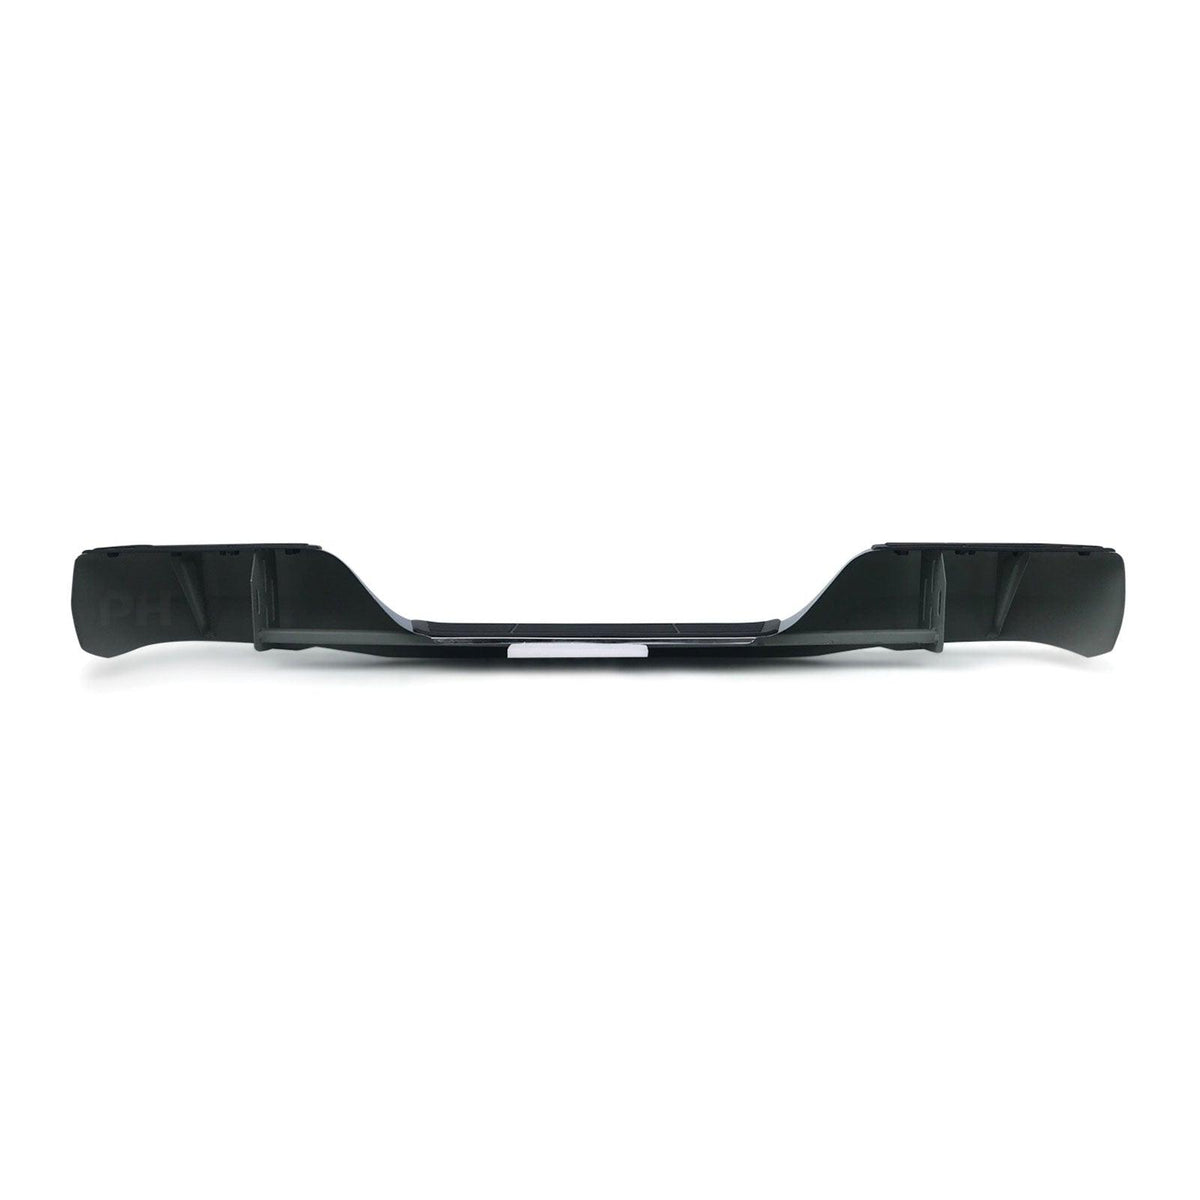 Bumper Bar REAR Chrome Step Fits Toyota Hilux SR5 05-14 - 4X4OC™